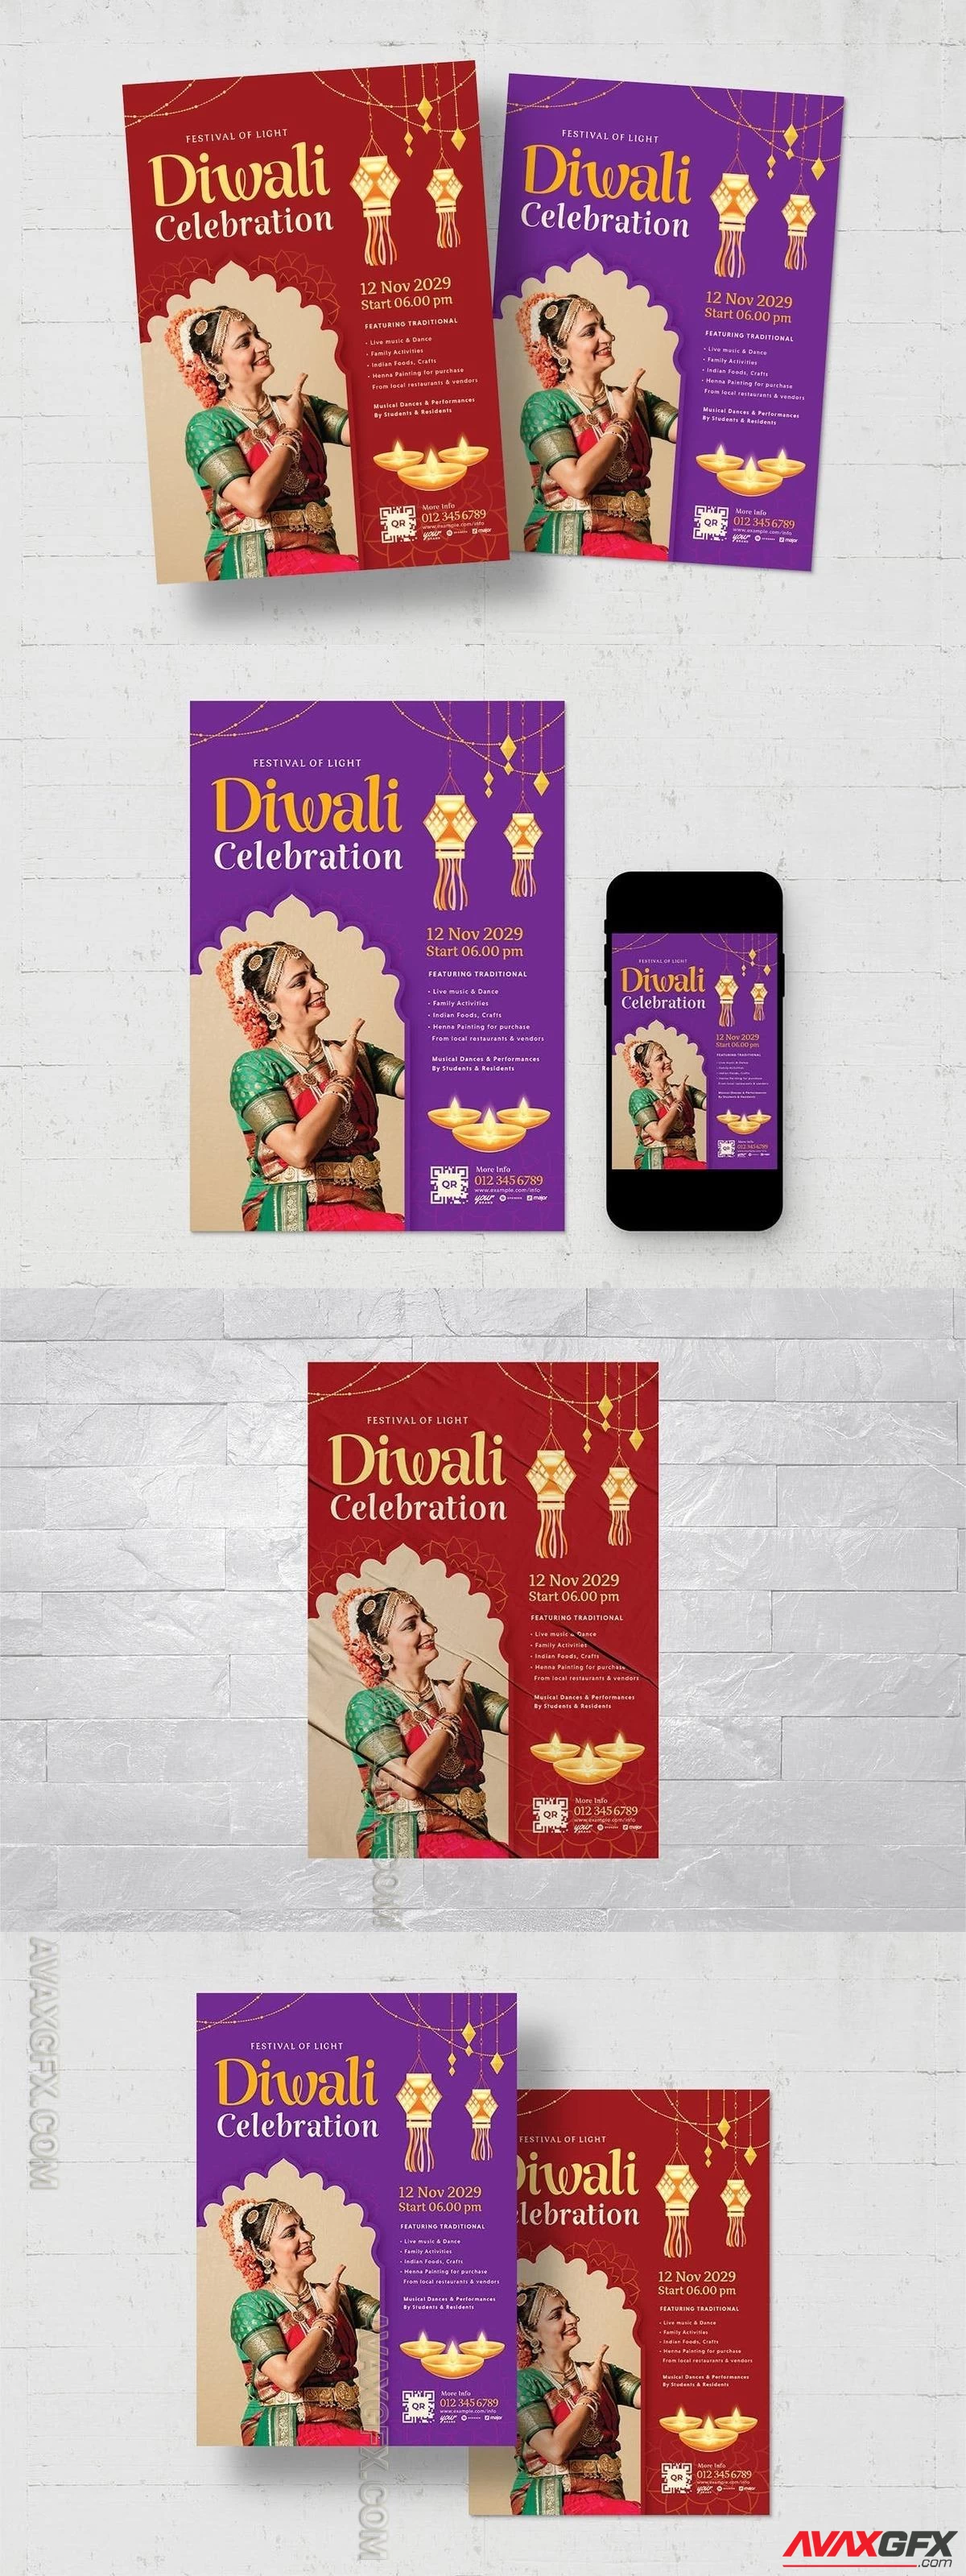 Diwali Flyer Template LYTLGPB [PSD]